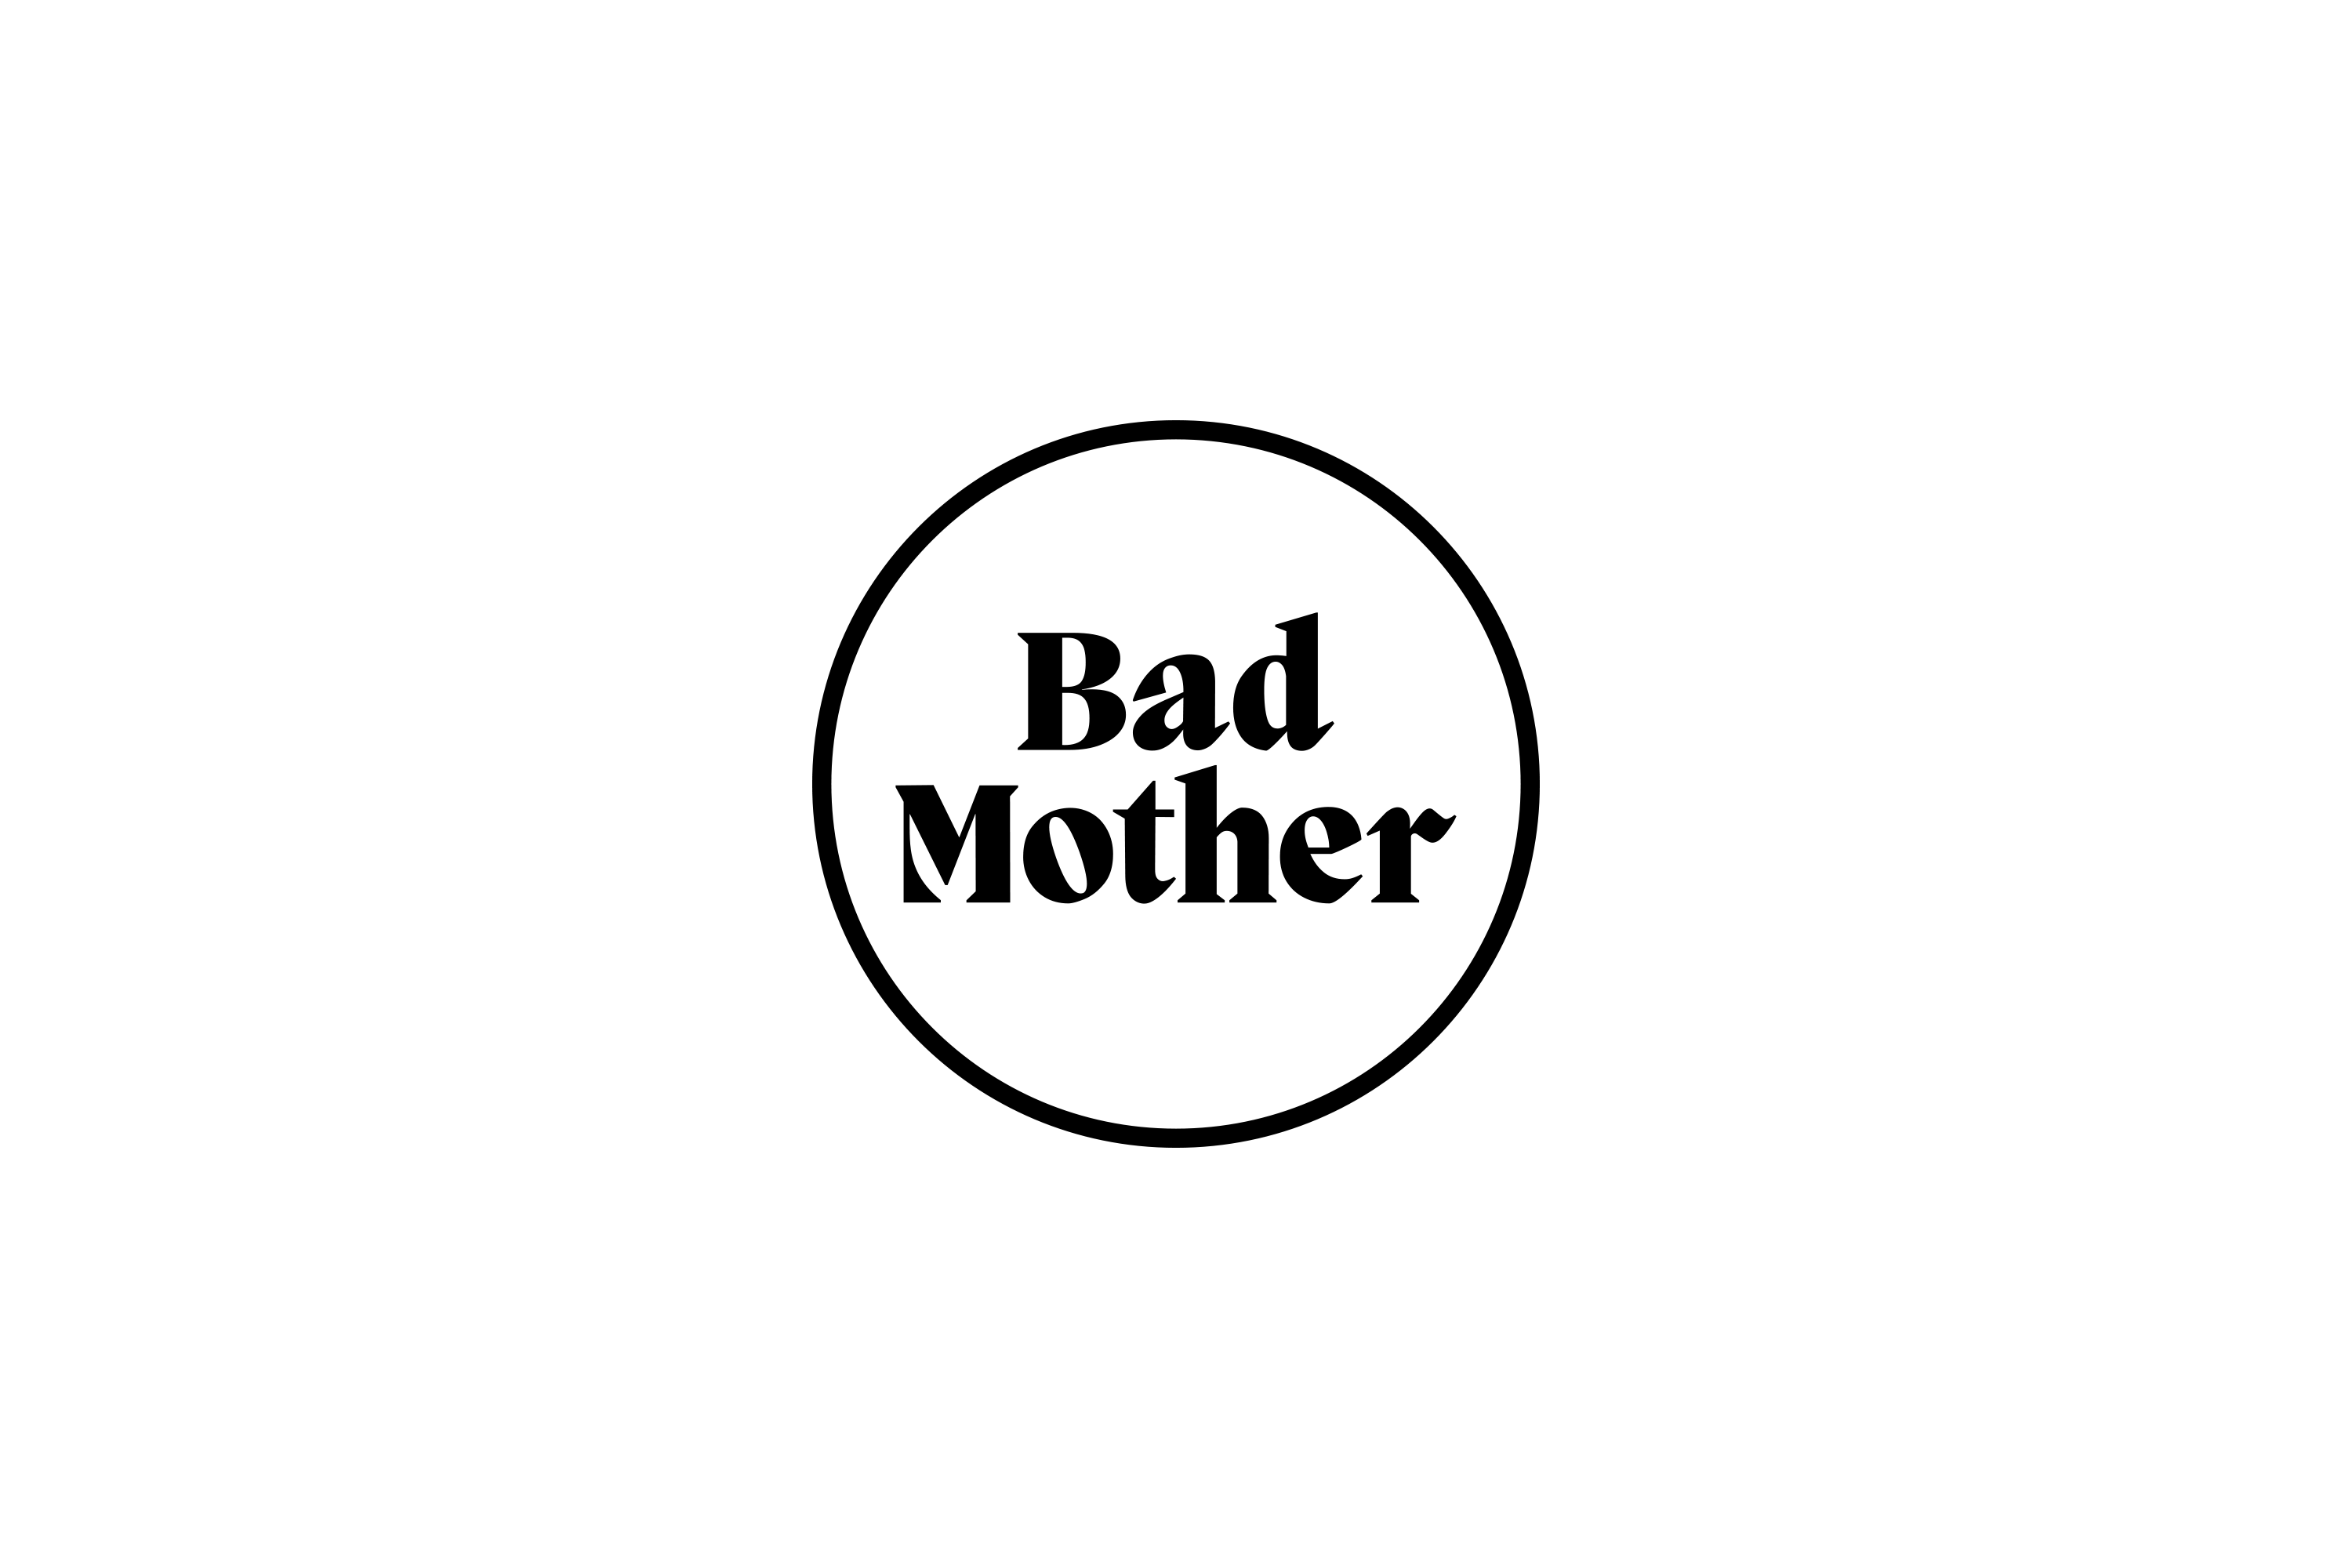 Chris-Reynolds-Logos-Bad-Mother-Badge